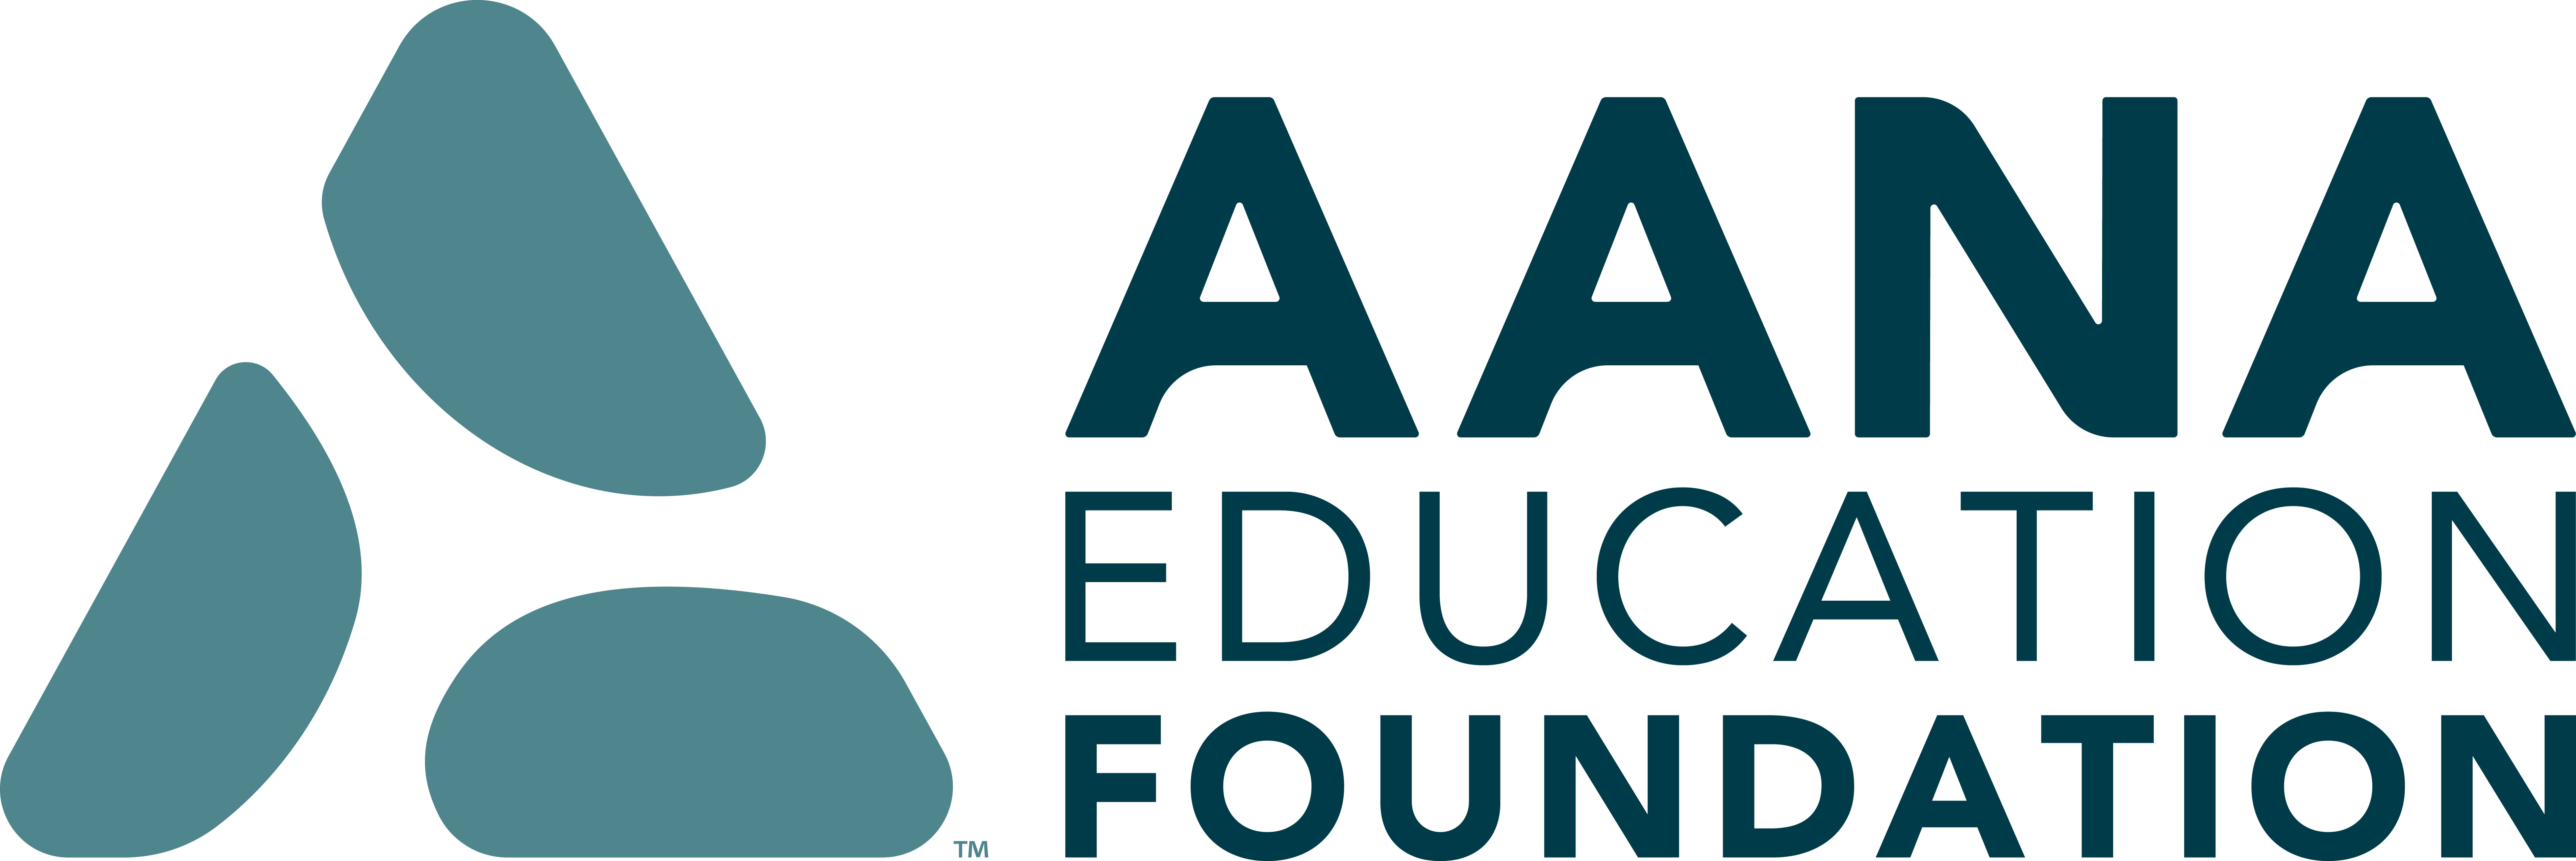 AANA Education Foundation